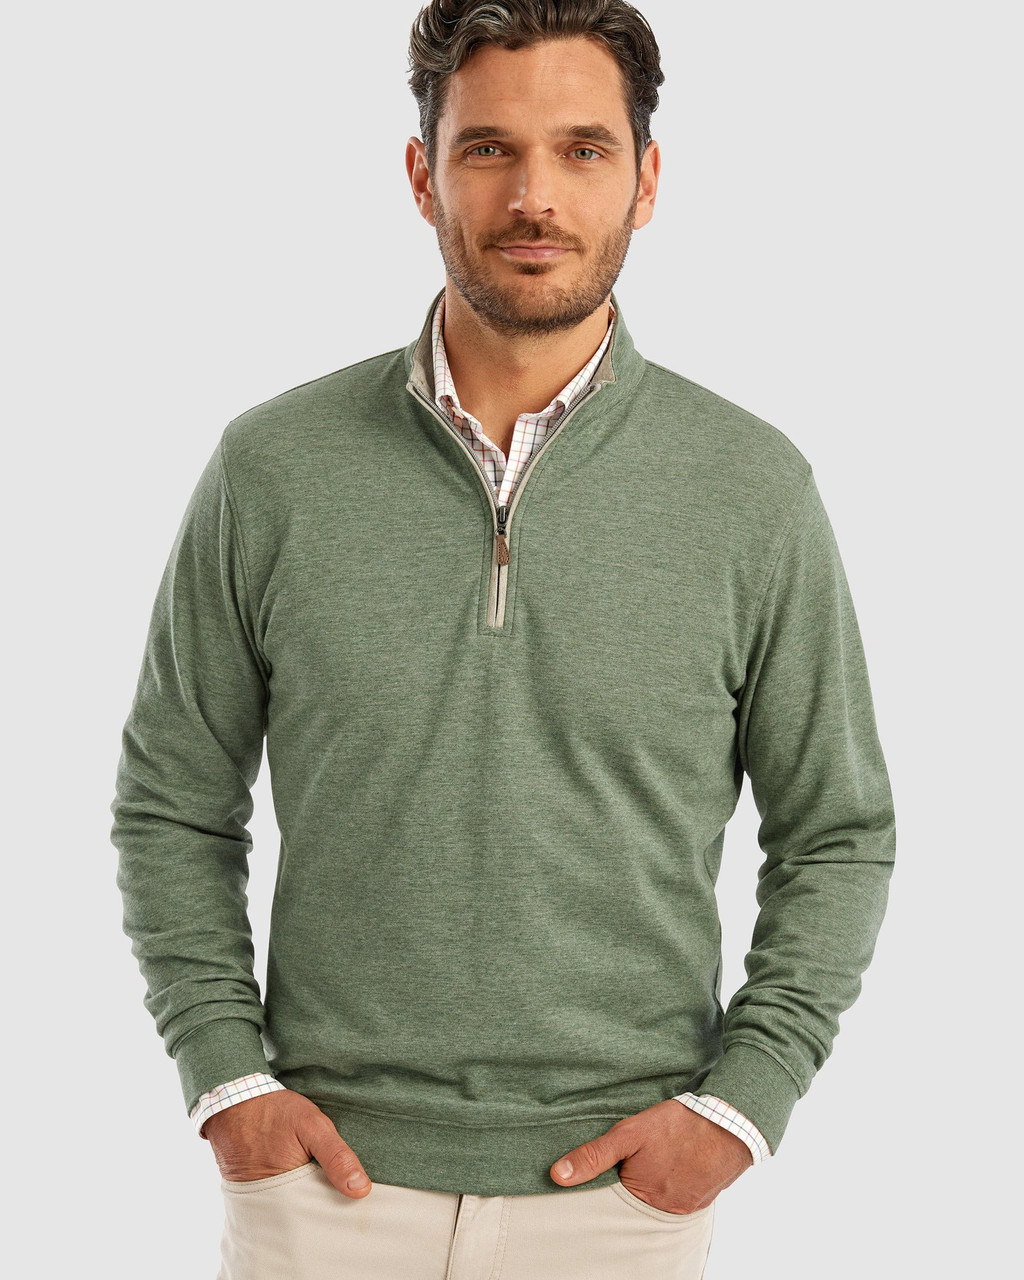 Weatherproof 151391 Vintage Cotton Cashmere Quarter-Zip Sweater